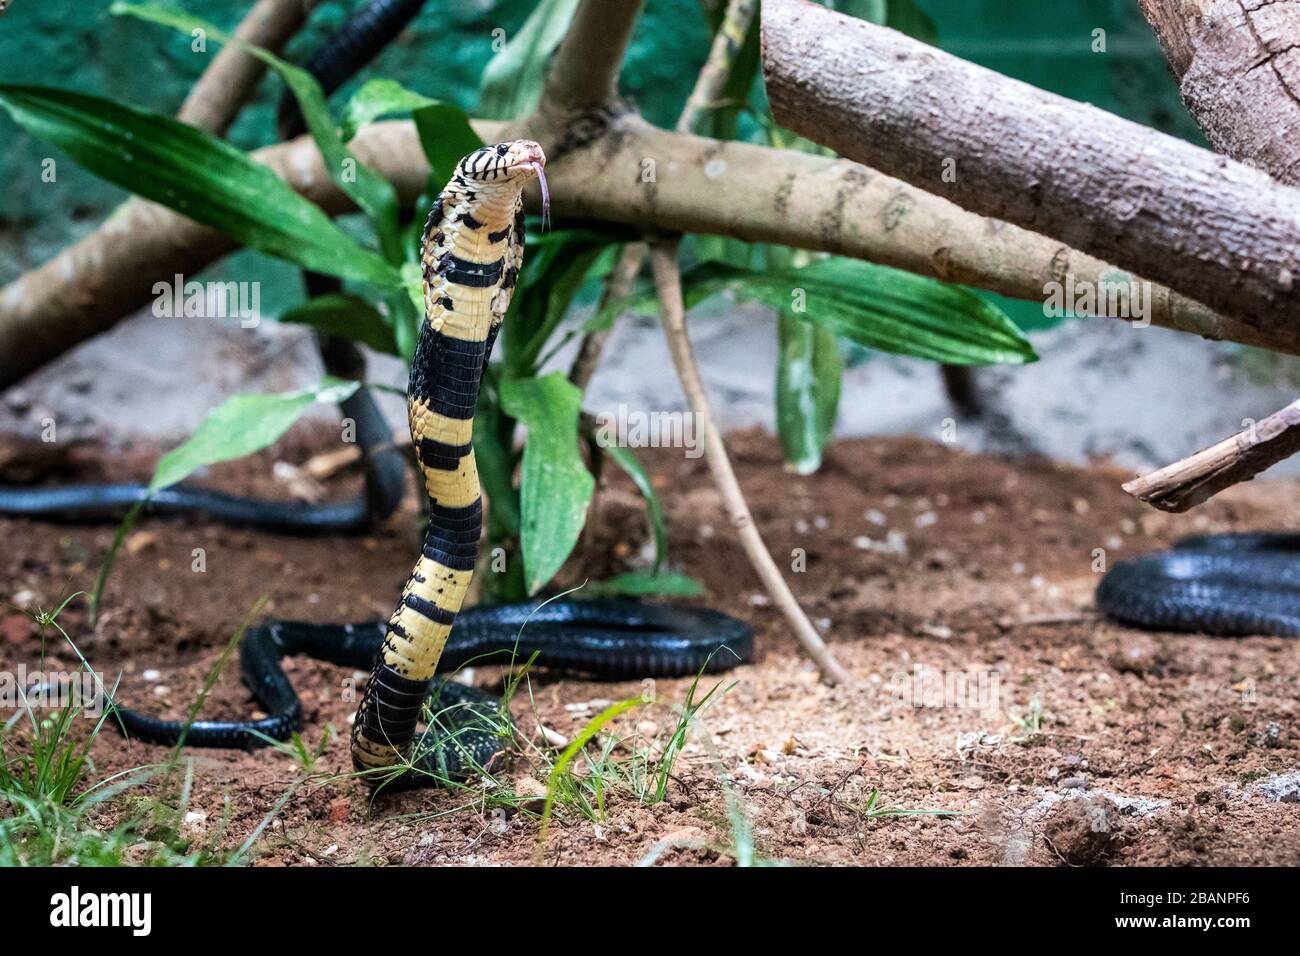 Cobra forestière (Naja melanoleuca) au village des Reptiles de l'Ouganda, Entebbe, Ouganda Banque D'Images